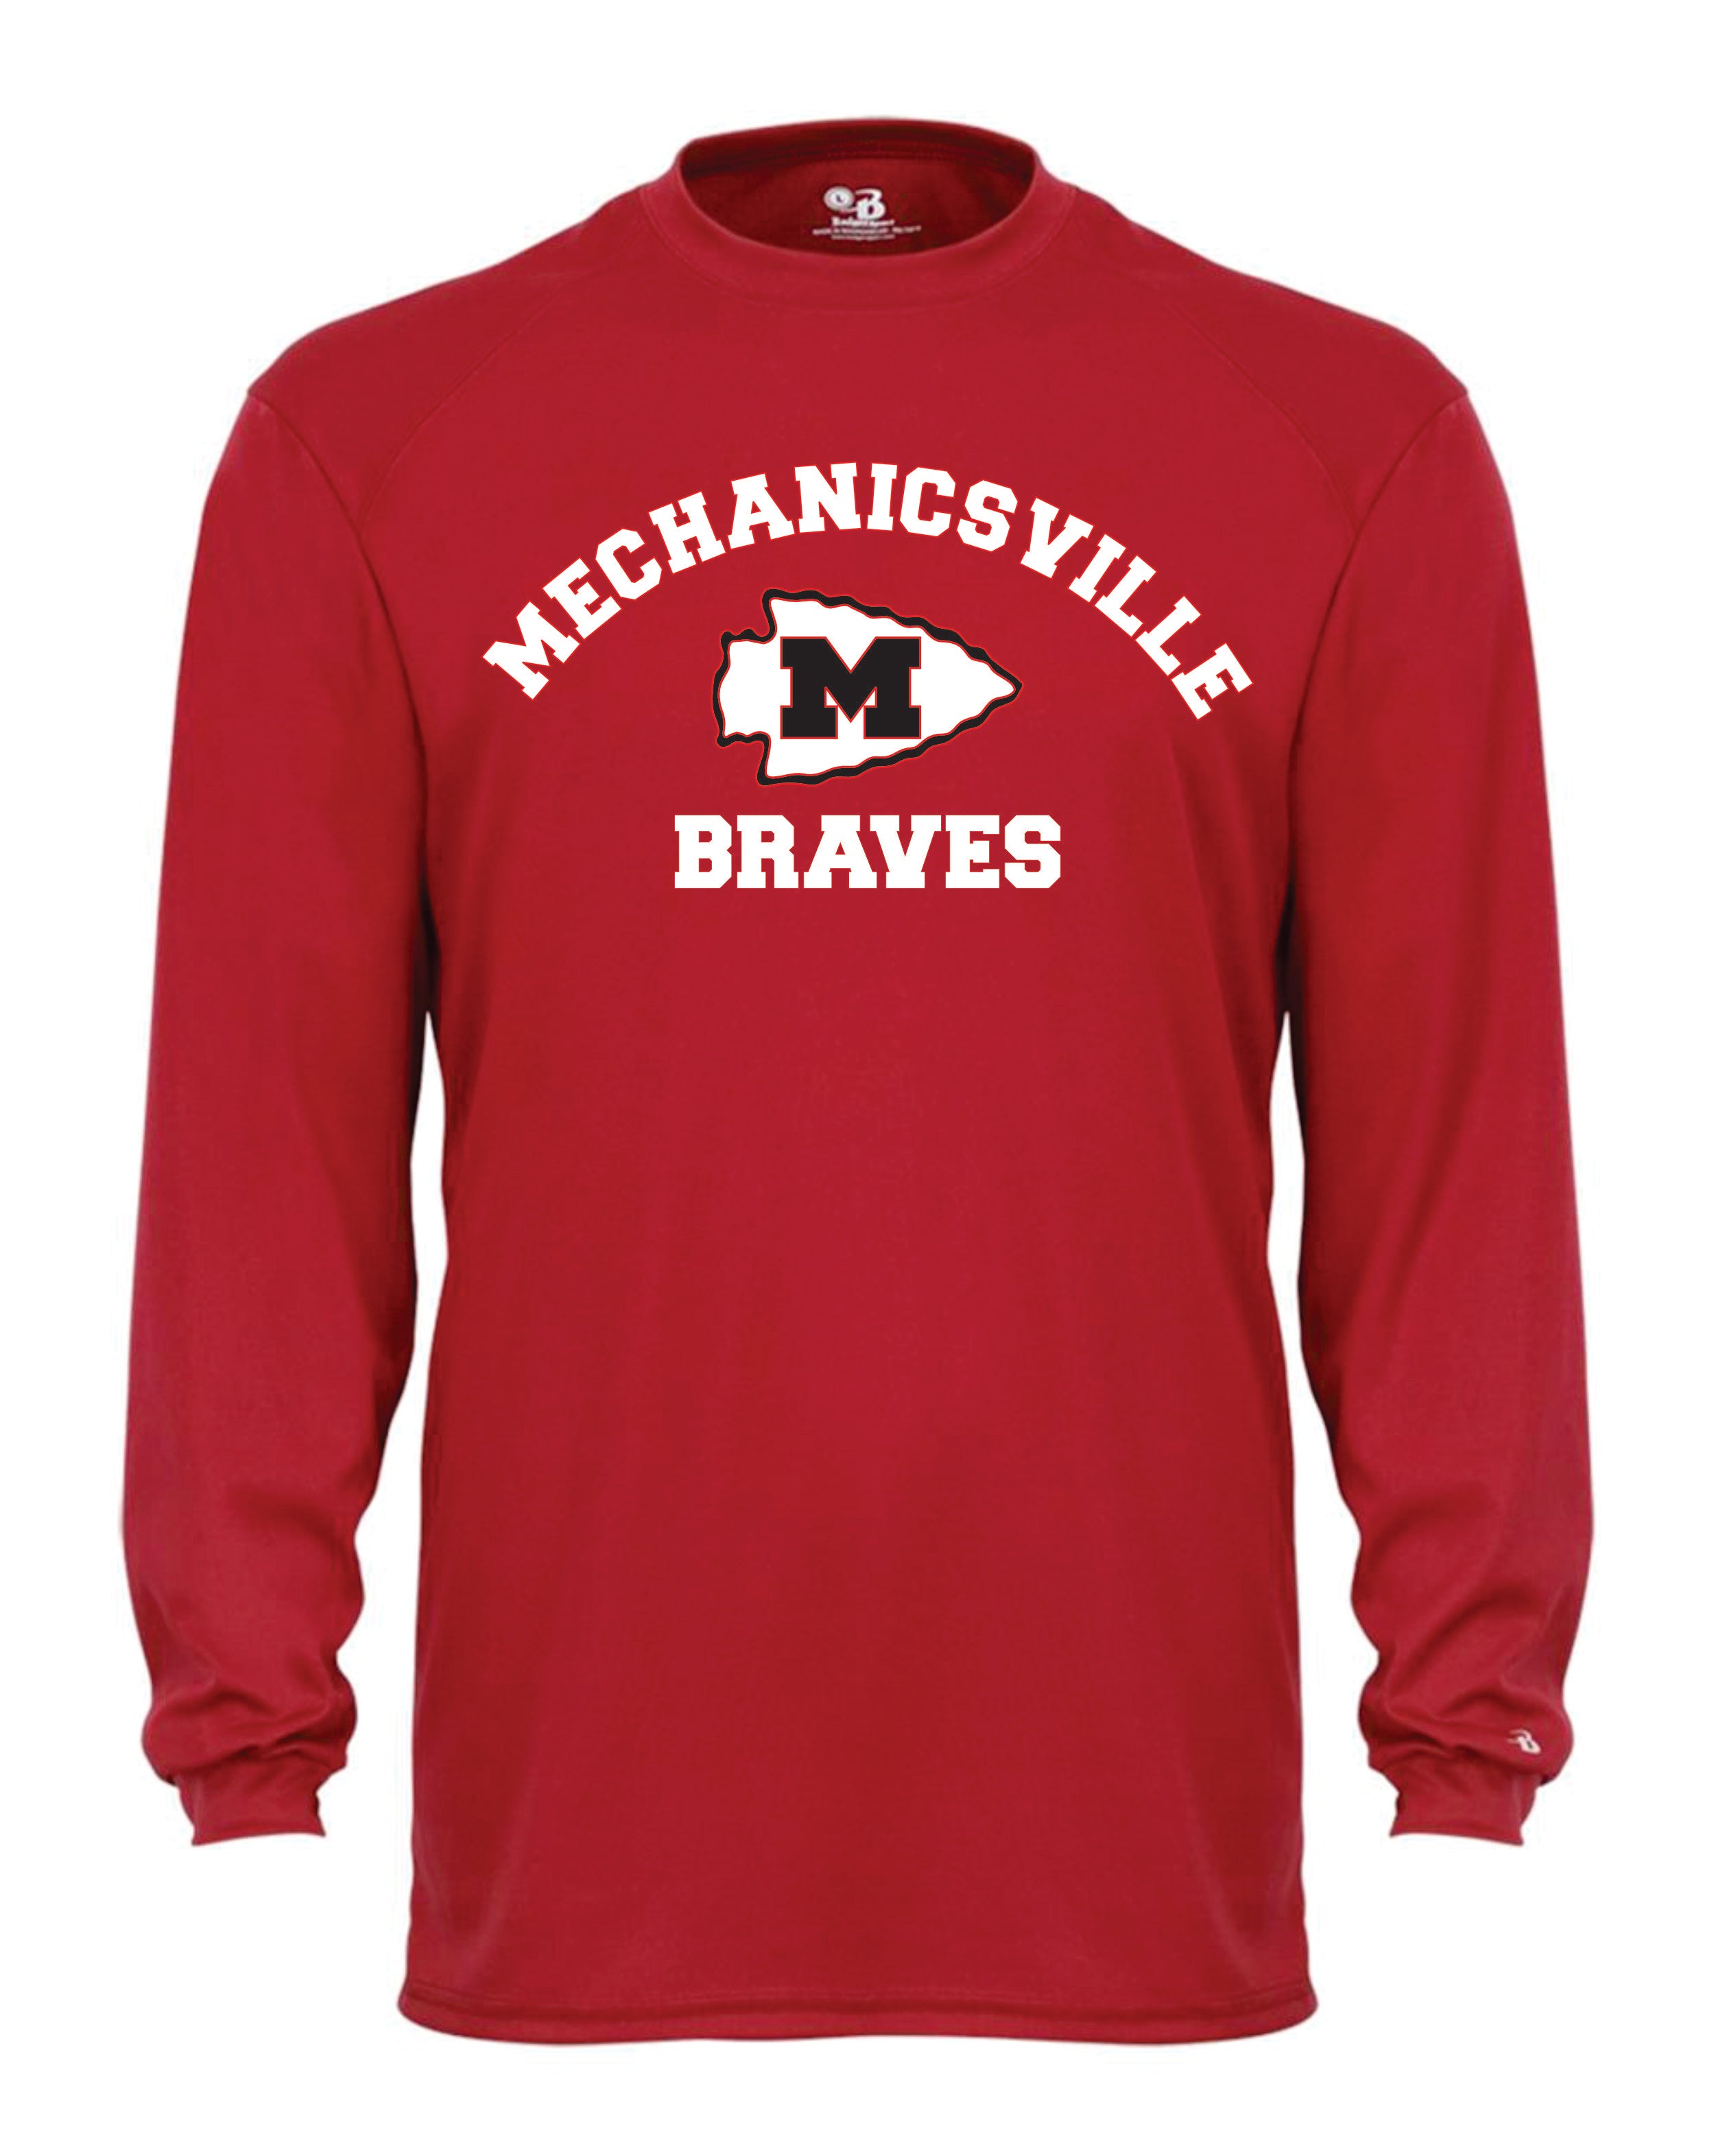 Mechanicsville Braves Long Sleeve Badger Dri Fit Shirt